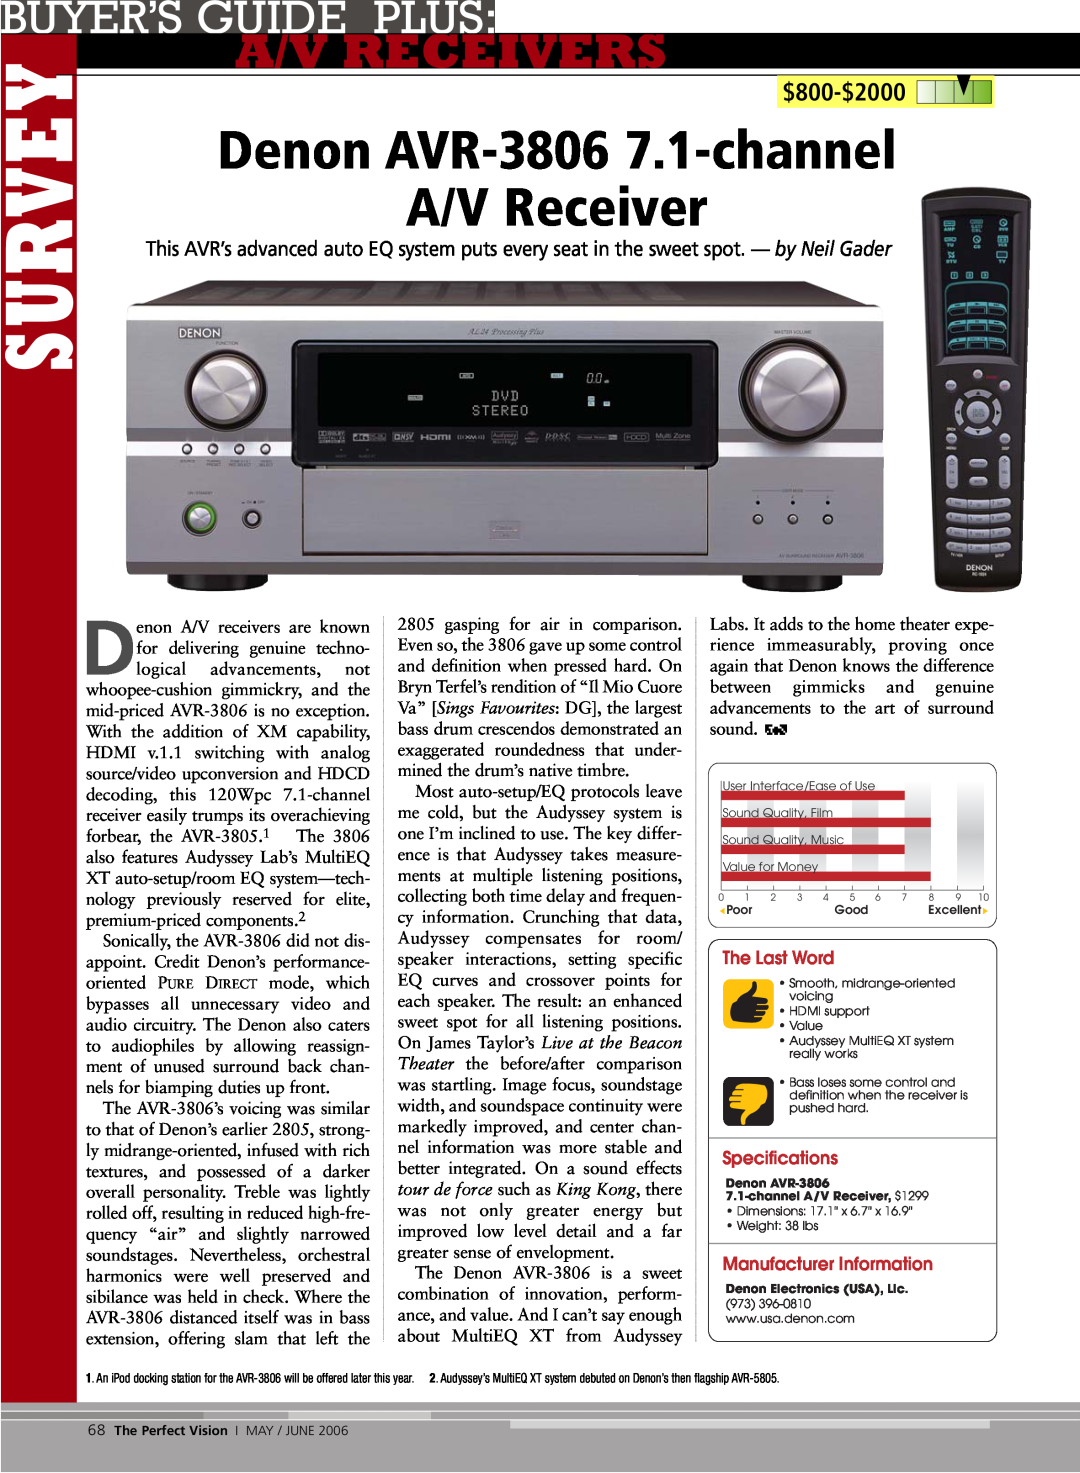 Denon AVR-3806 manual A/V Receiver 